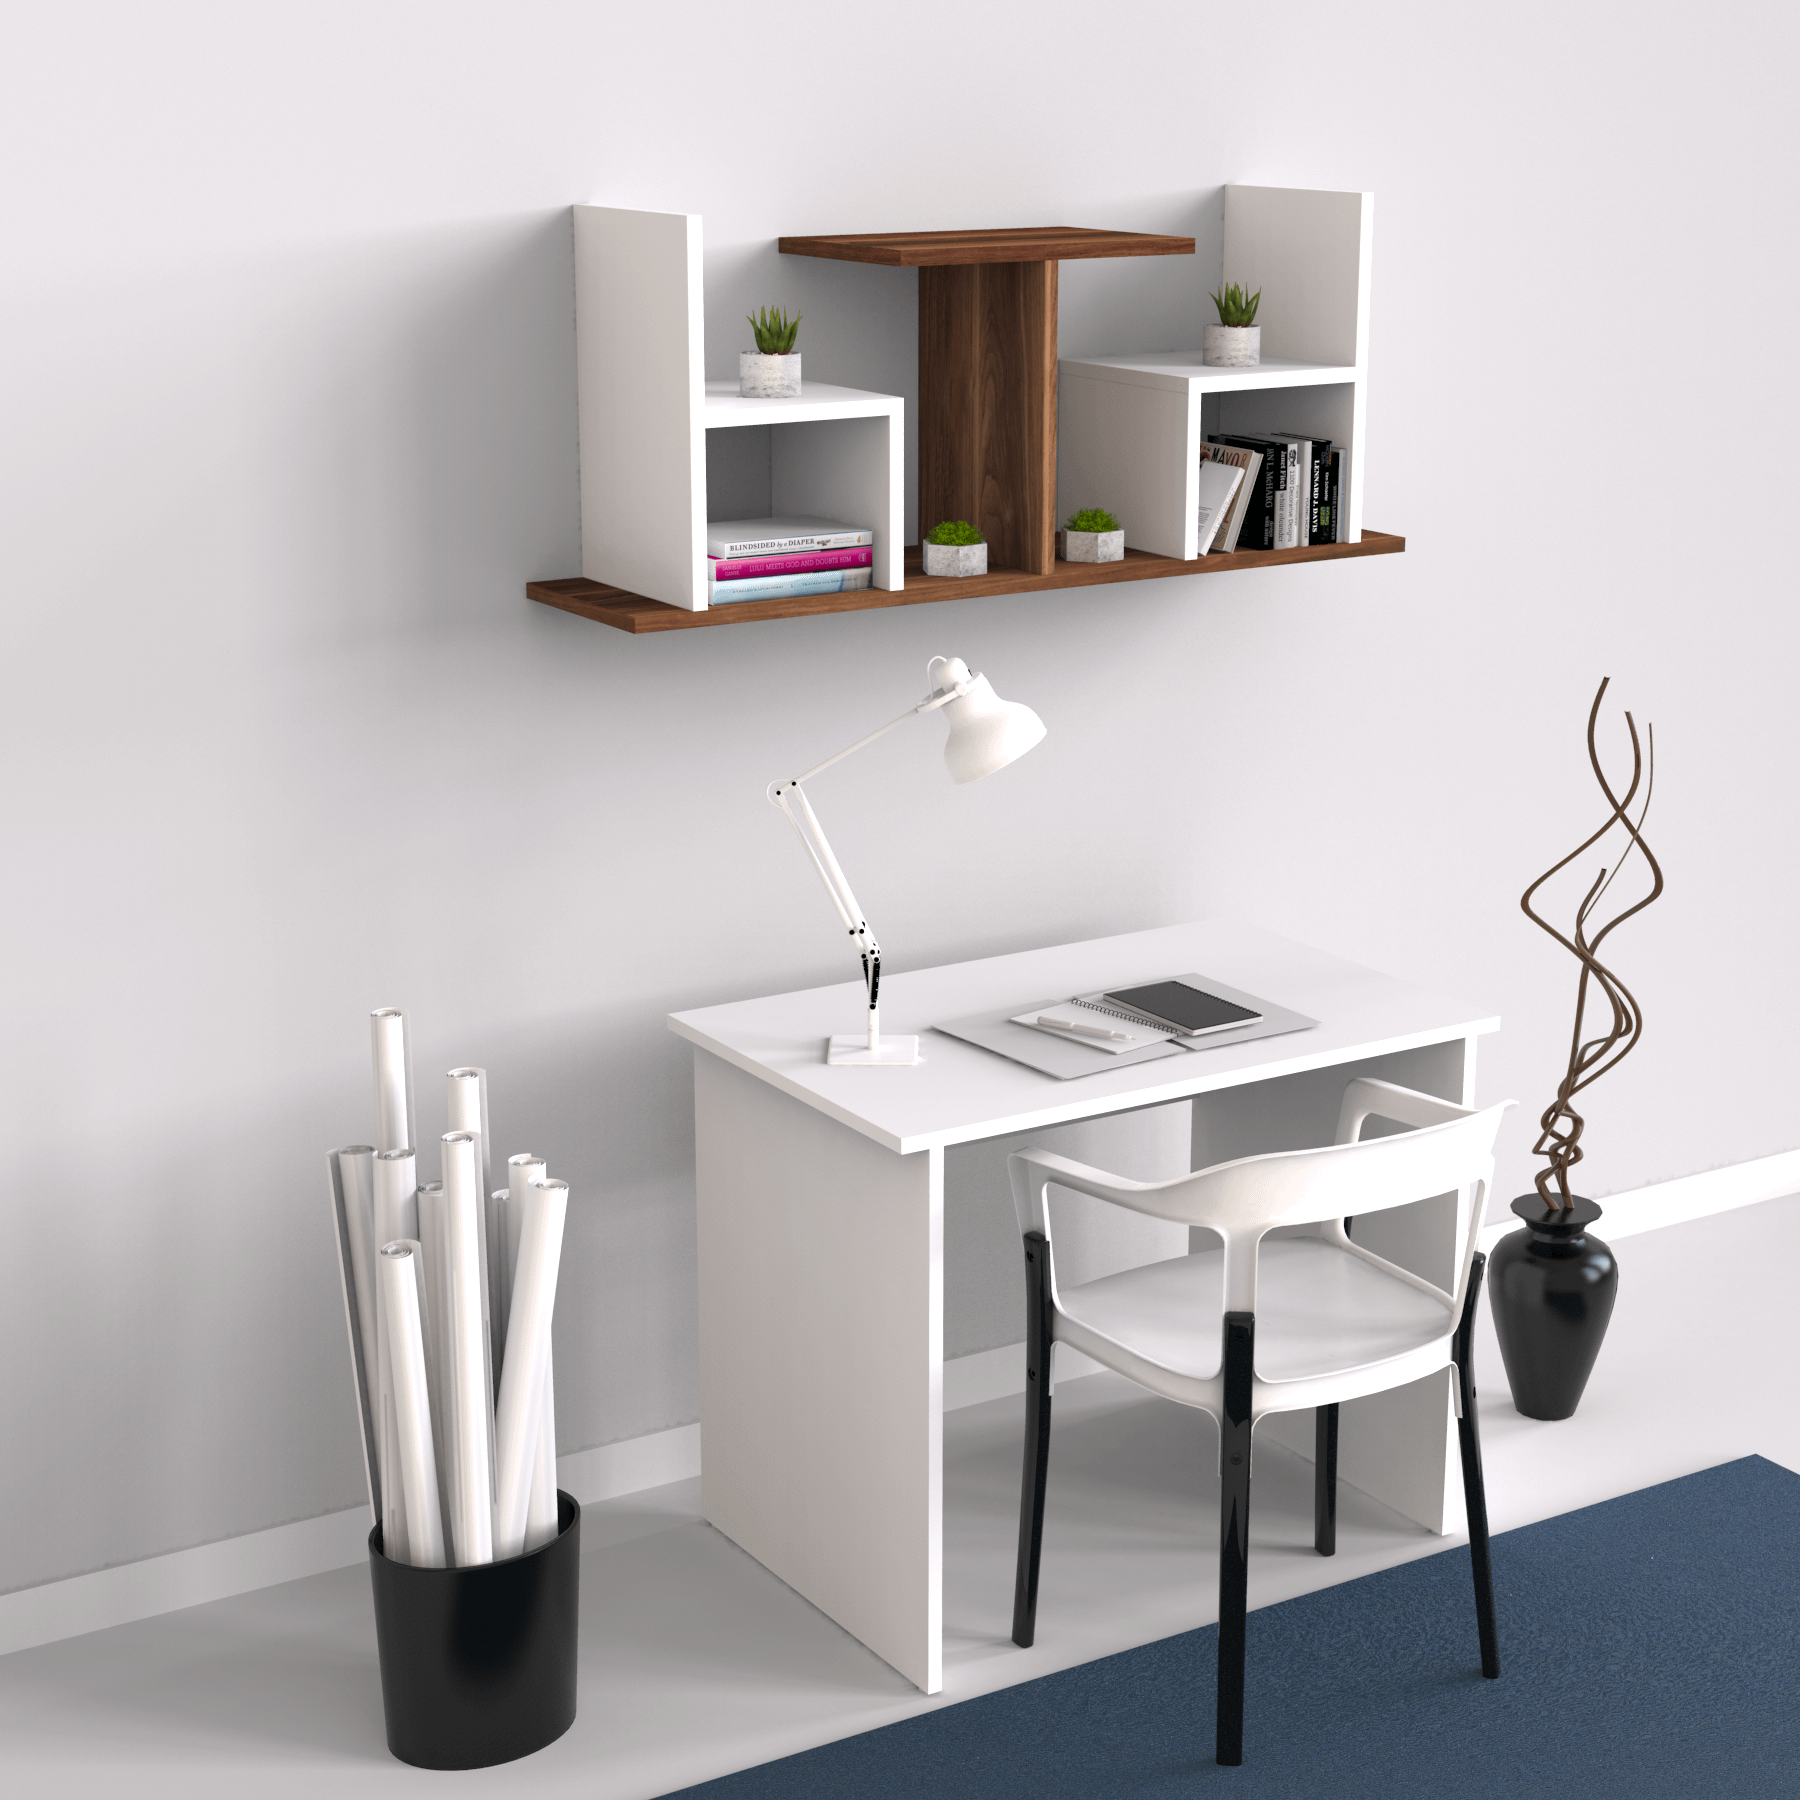 Mimilos R6 Decorative Shelf